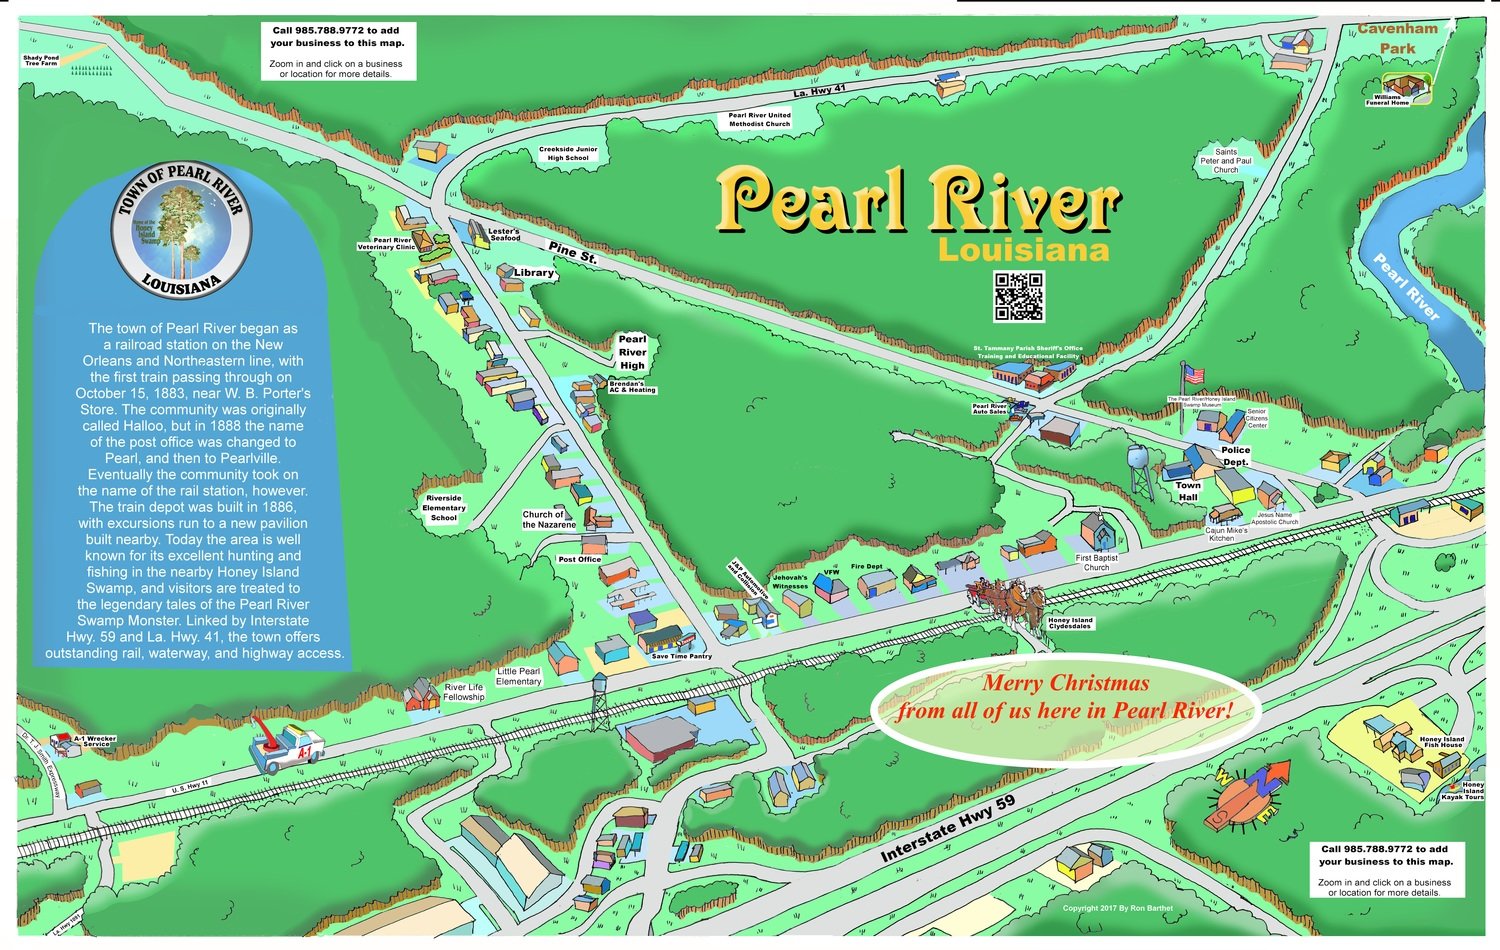 11" X 17" Full Color Caricature Rendering of Pearl River, LA